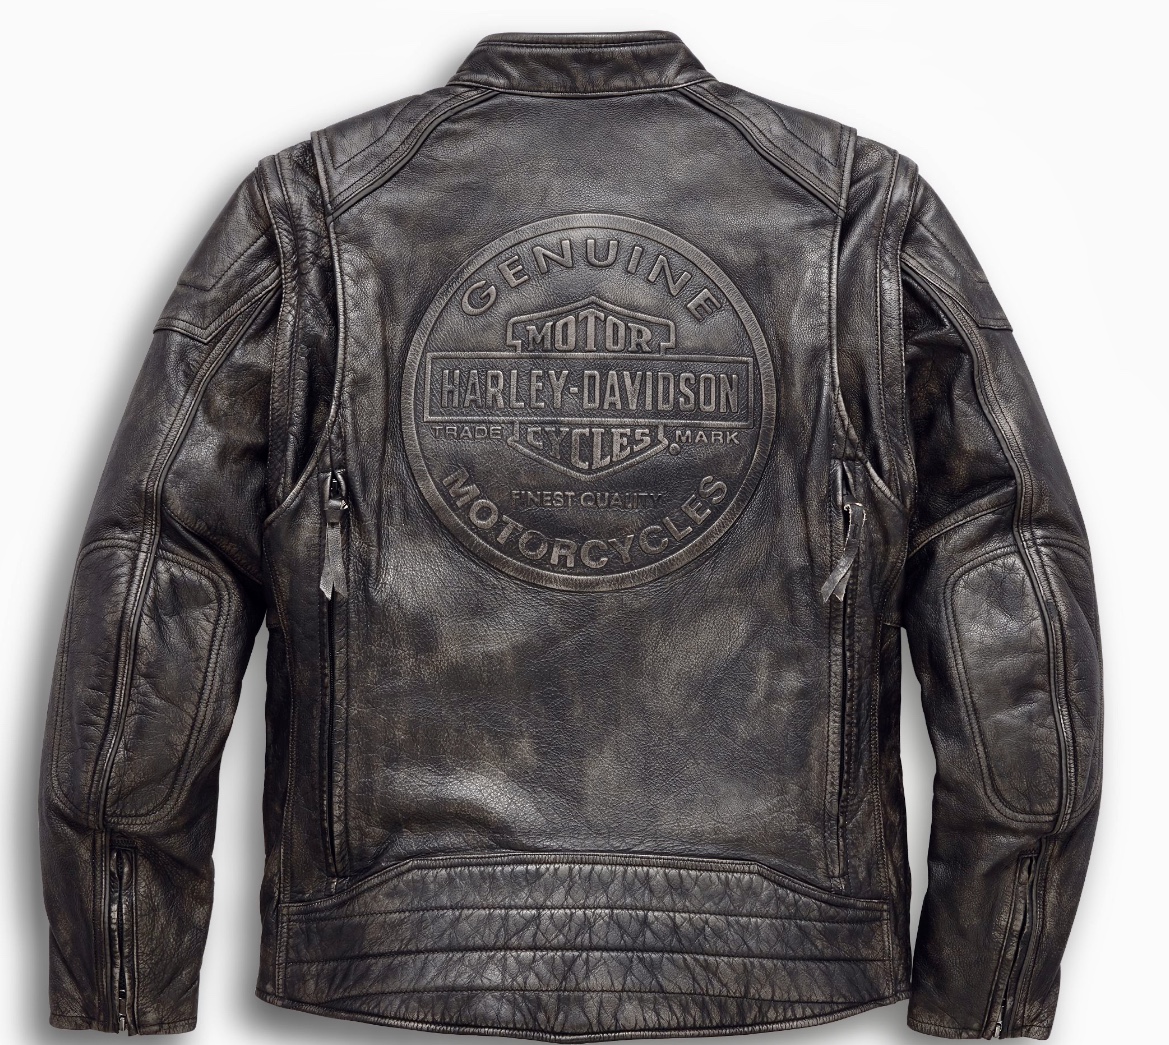 Harley-Davidson  - Jacket - Harley-Davidson leather jacket  